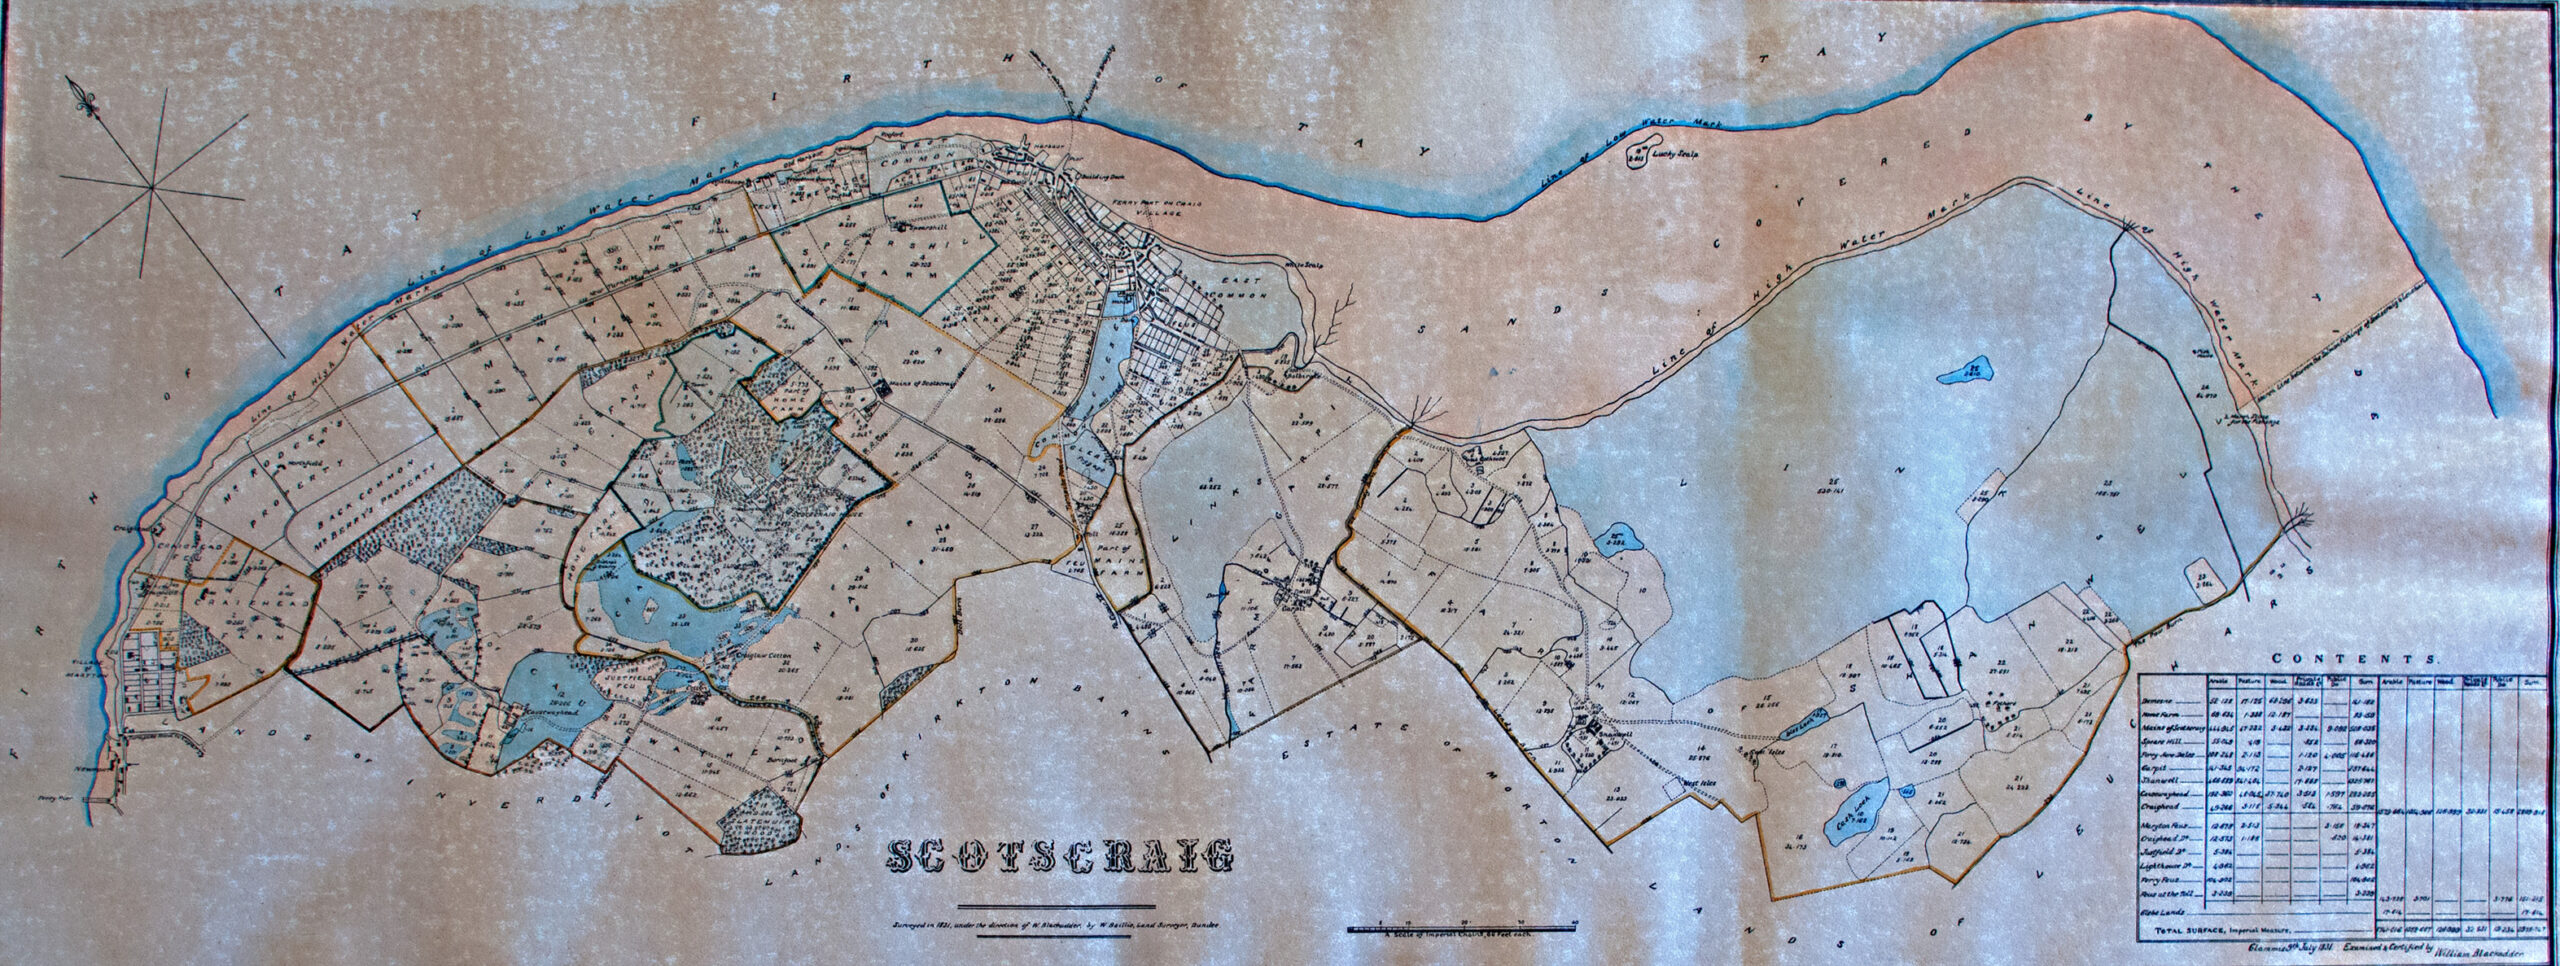 Tayport Heritage Trail - Board 12 - 1831 Blackadder Map of Scotscraig Estate